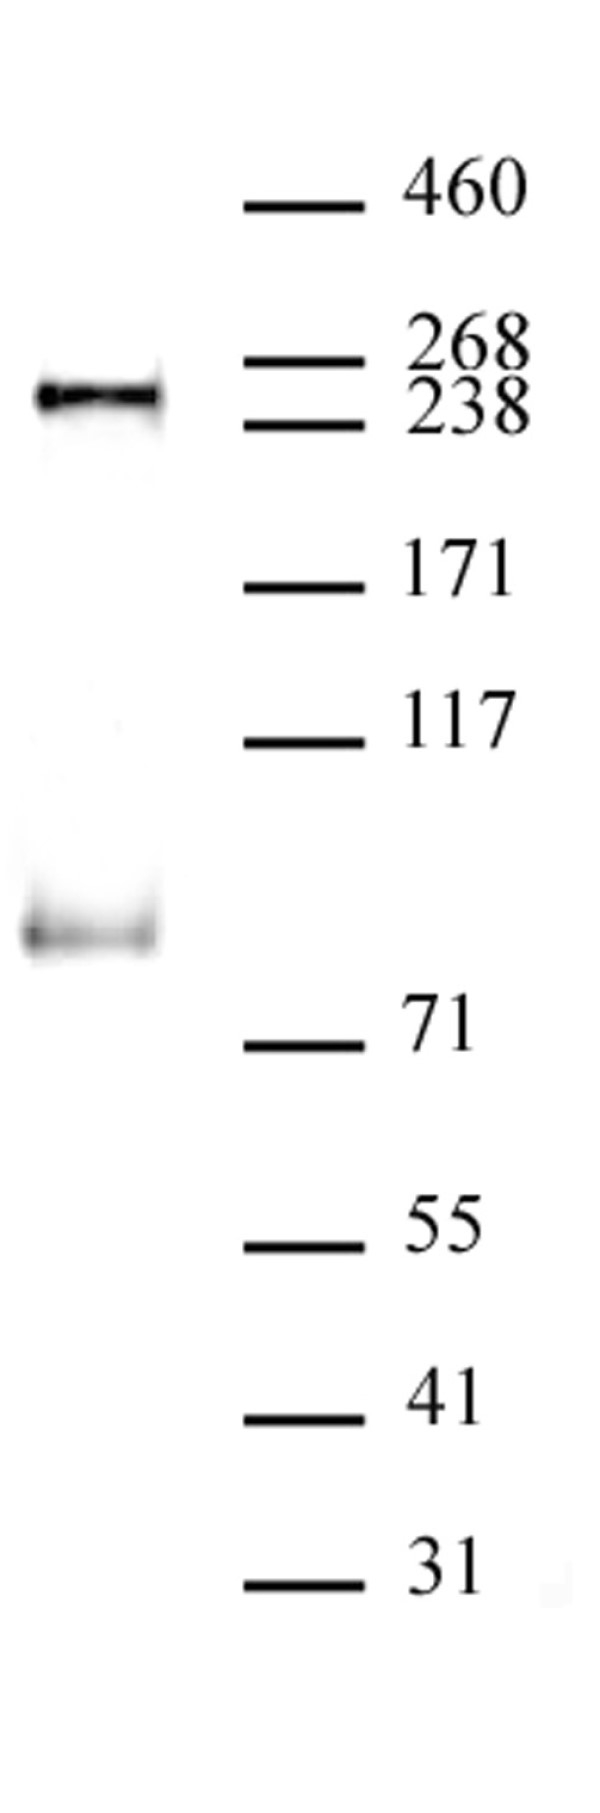 Anti Human RNA Pol II CTD (pSer5) Antibody, clone 1H4B6 gallery image 2